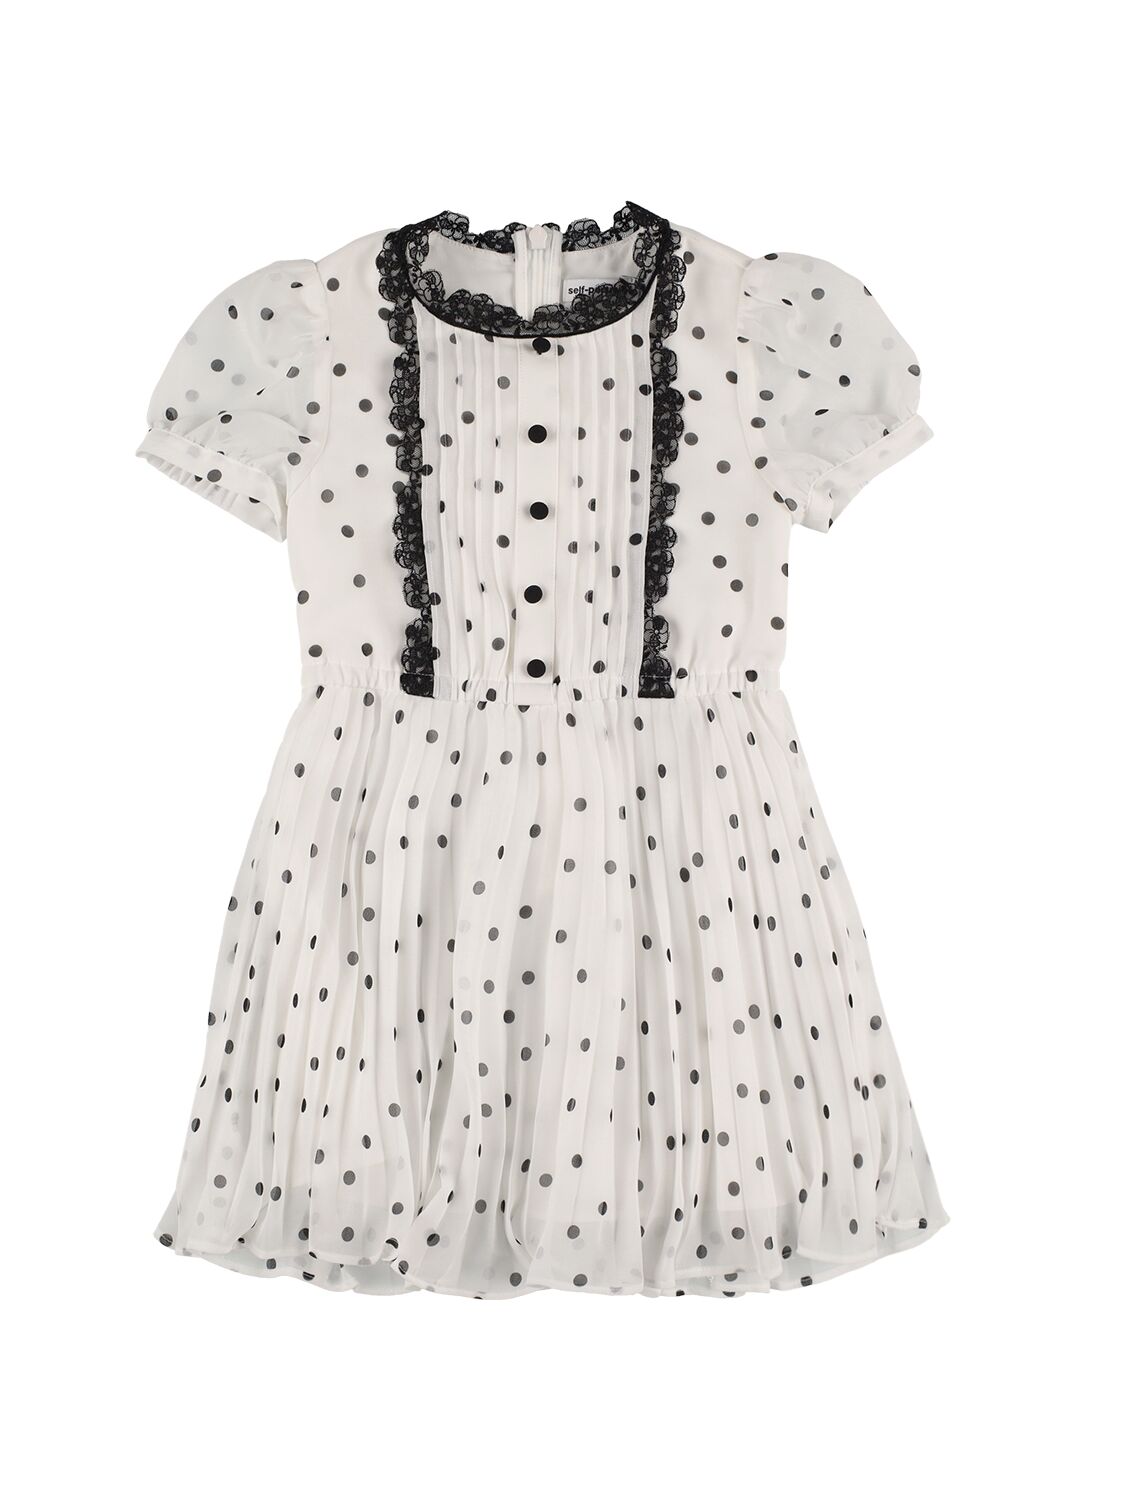 Image of Polka Dot Printed Chiffon Dress